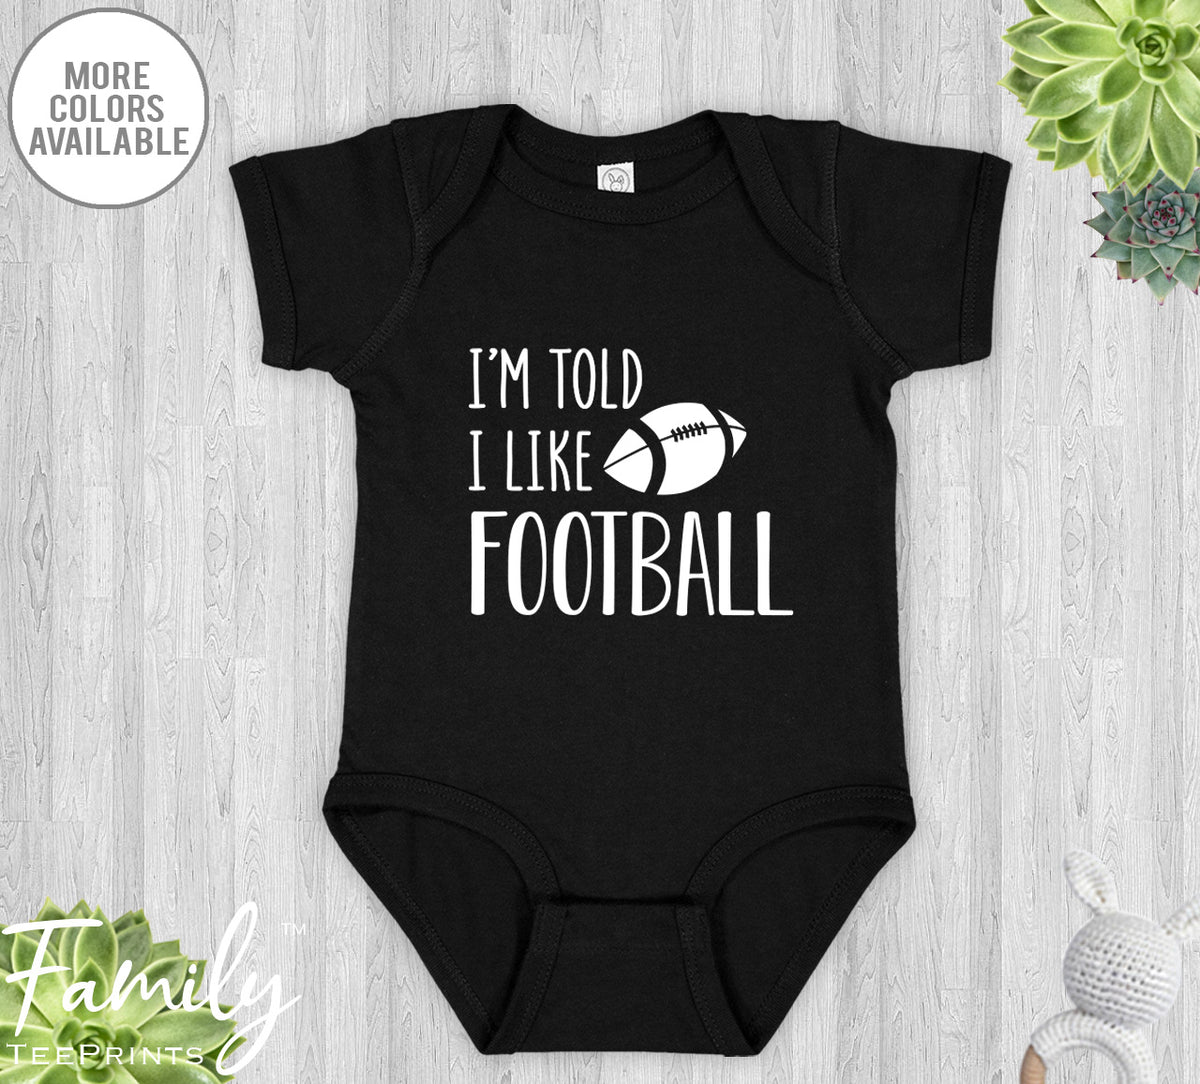 I'm Told I Like Football - Baby Onesie - Funny Baby Bodysuit - Funny Football Baby Gift